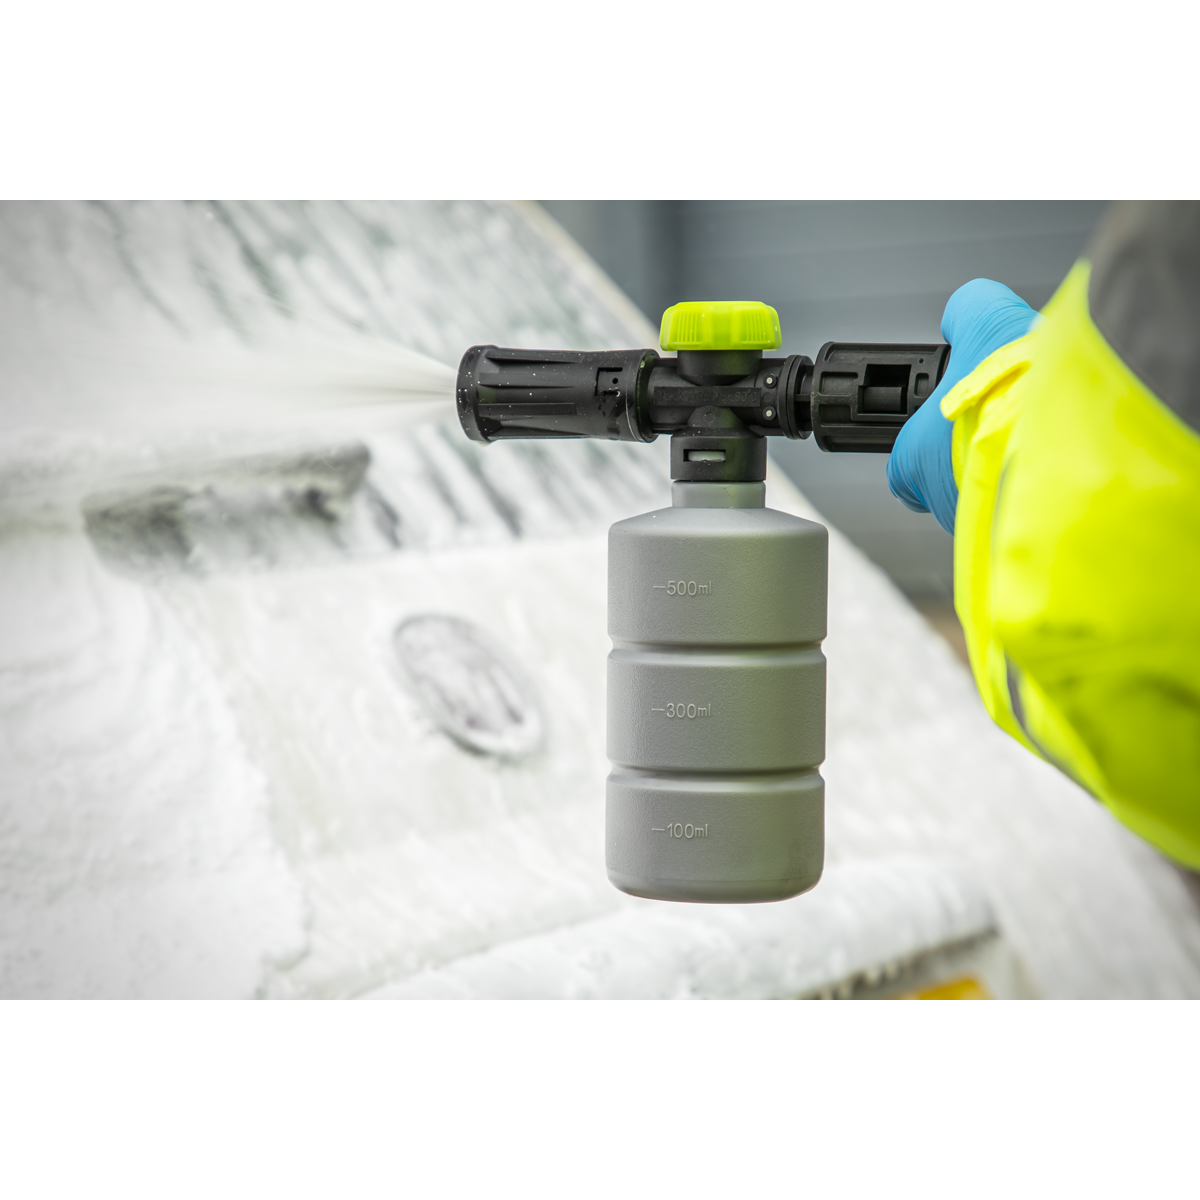 Greenworks High Pressure Soap Applicator Universal Pressure Washer  Attachment OB